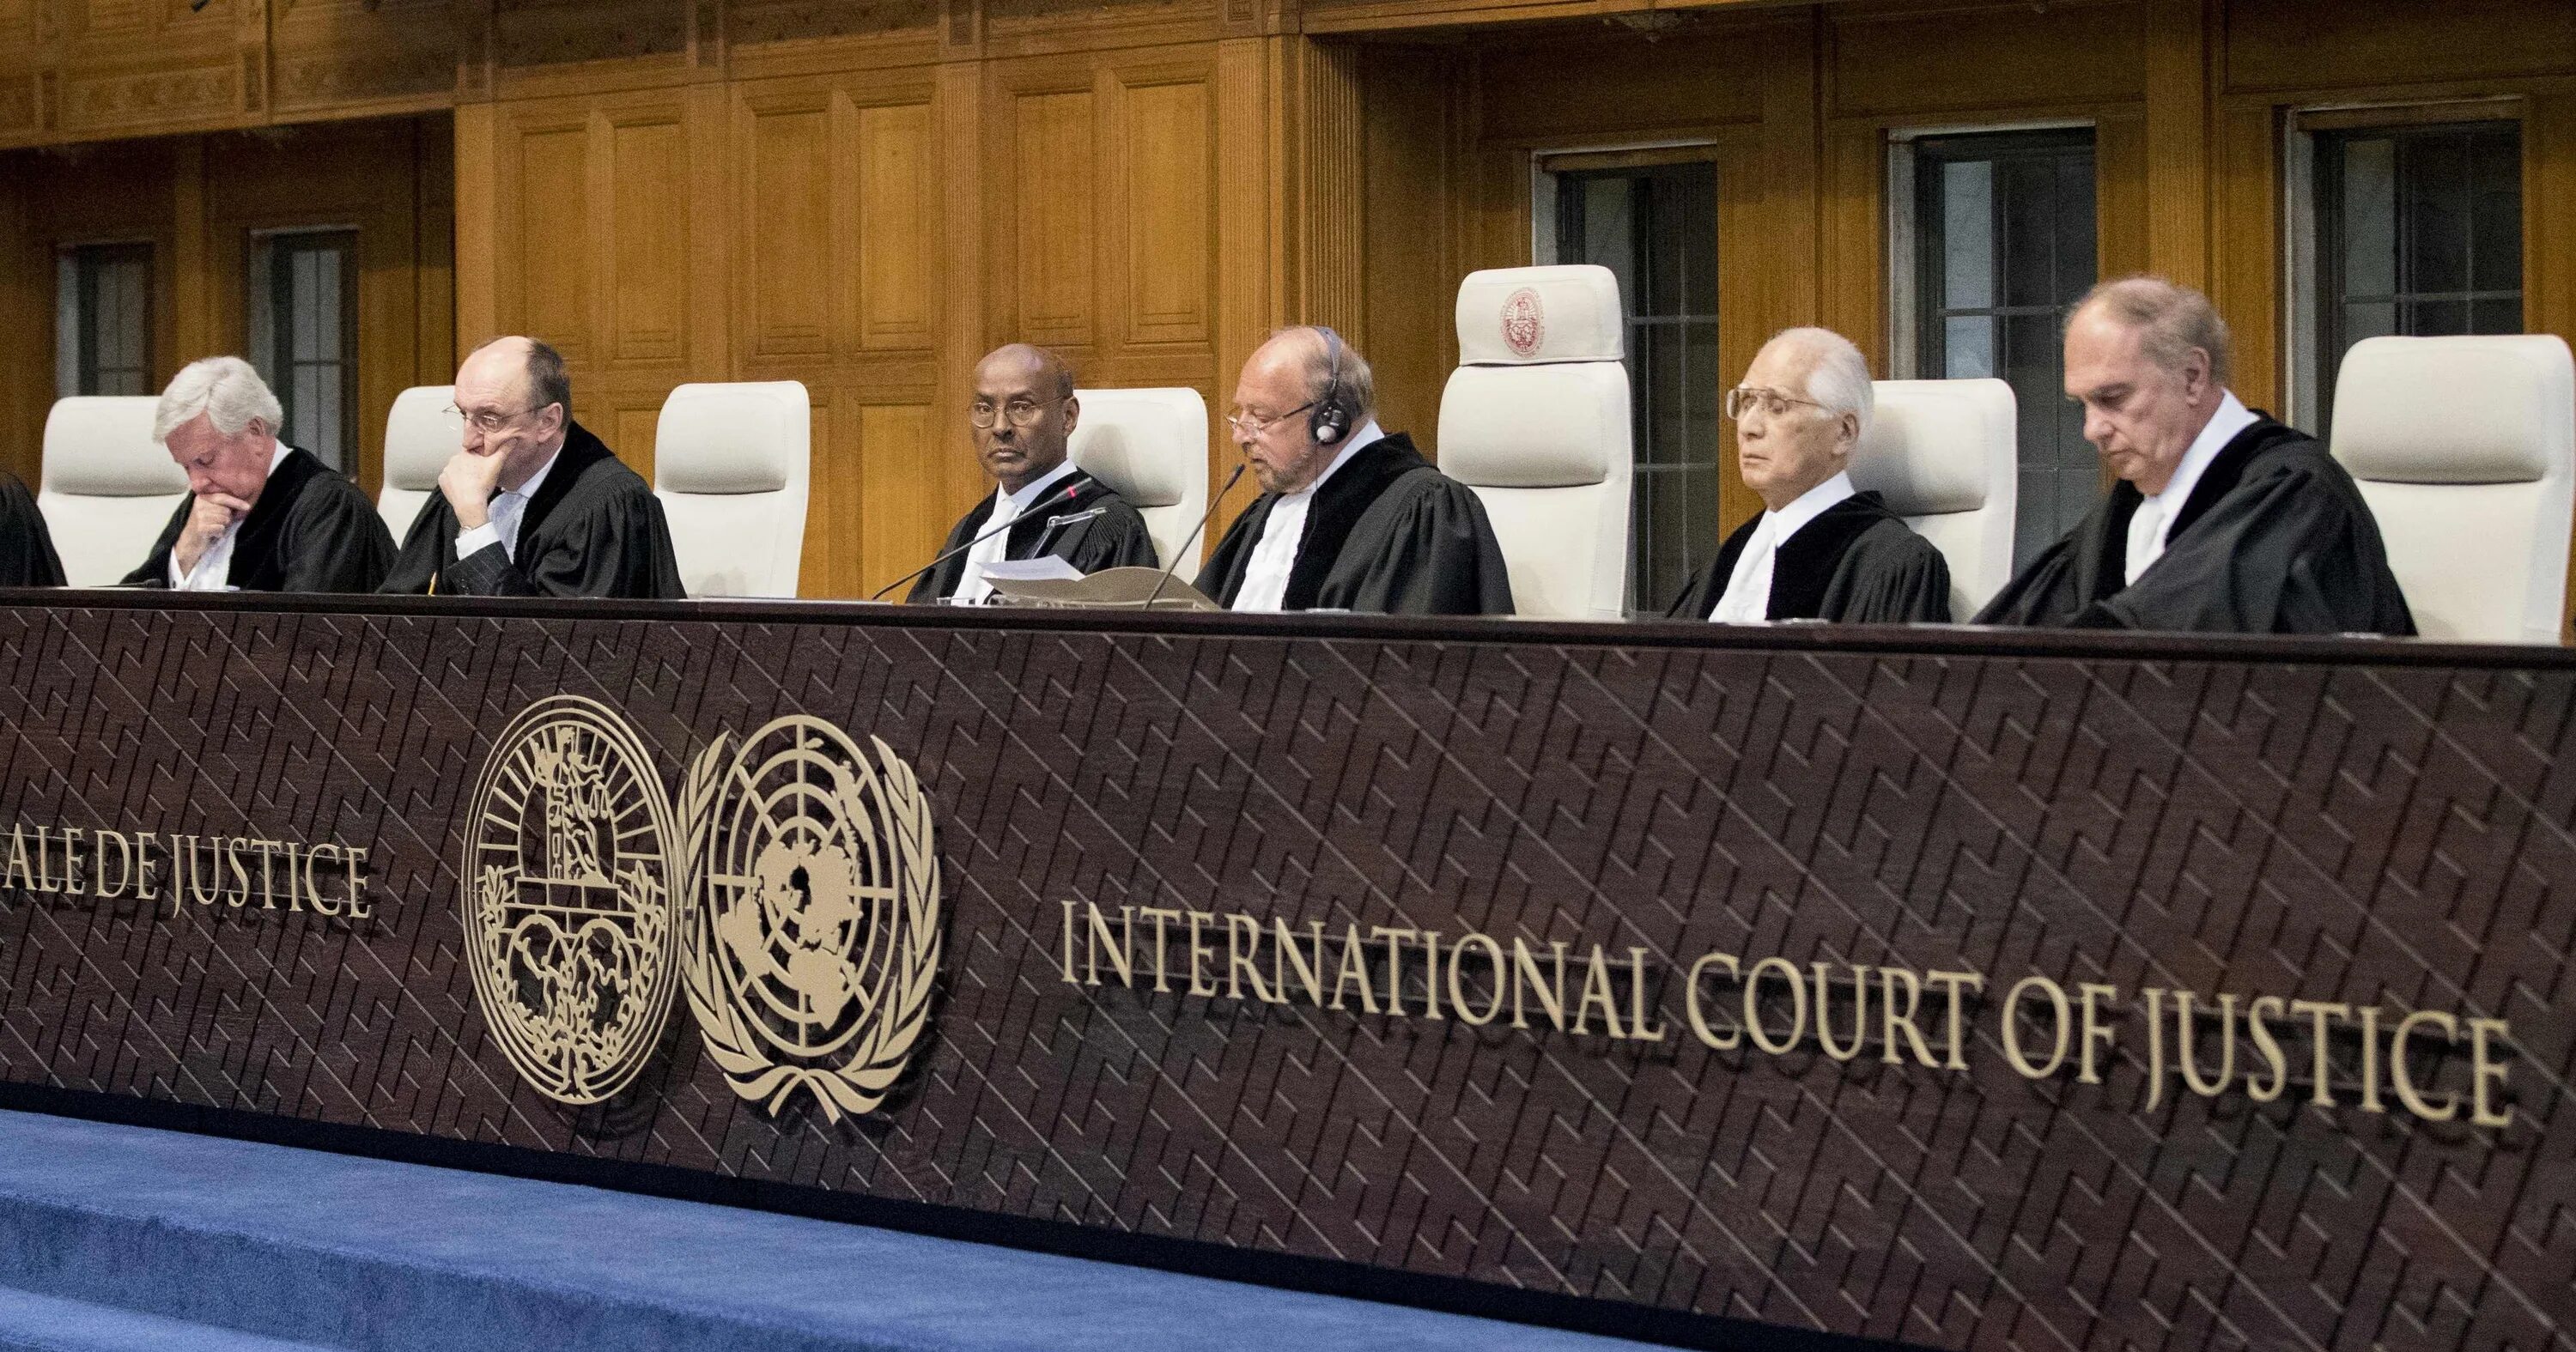 Генеральный суд оон. Международный суд ООН В Гааге. Международный Уголовный трибунал (Гаага). ICJ (International Court of Justice)ICJ (International Court of Justice). Судьи международного суда ООН.